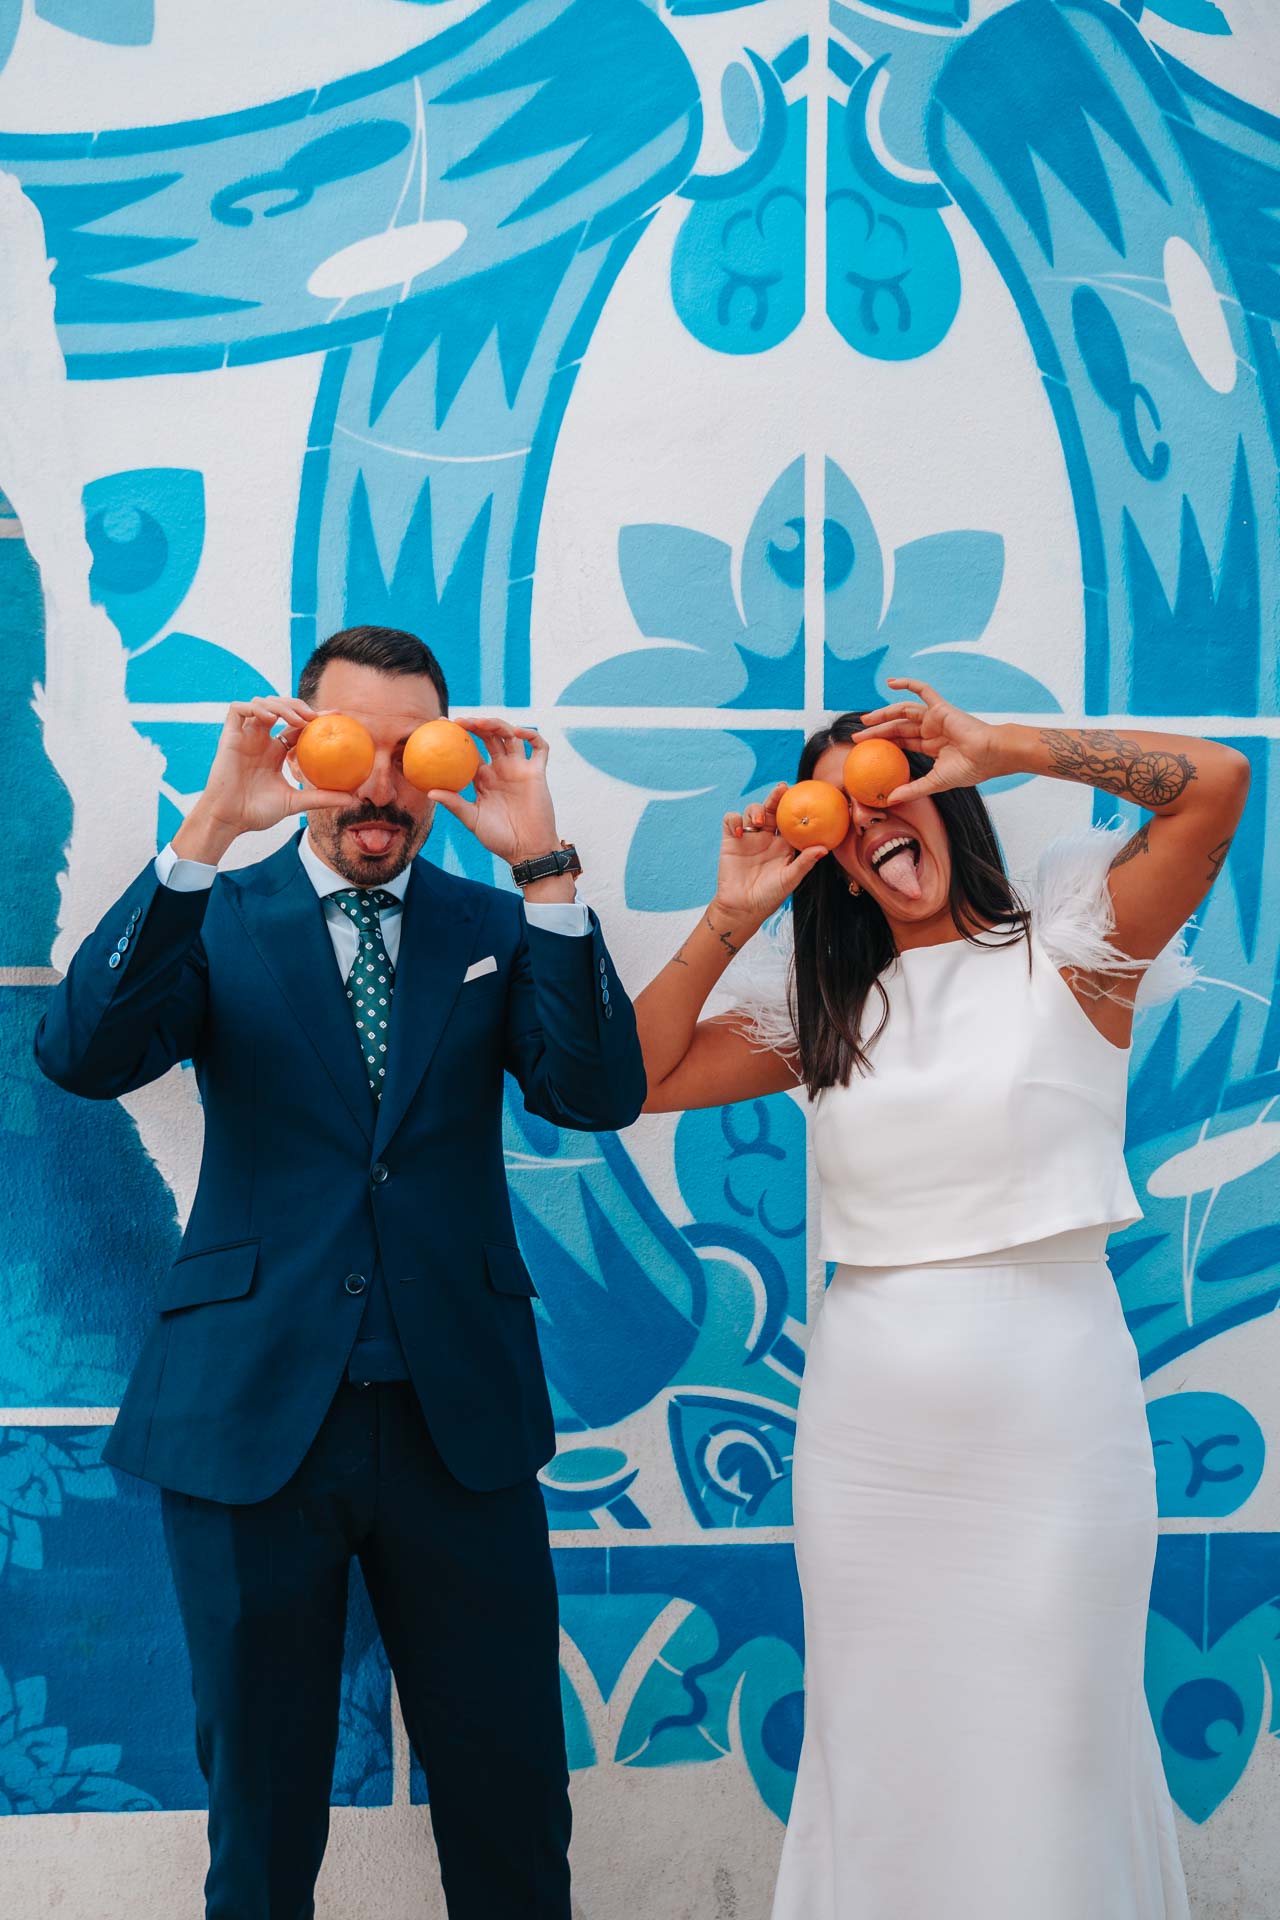 Post wedding photoshoot in Algarve, Portugal